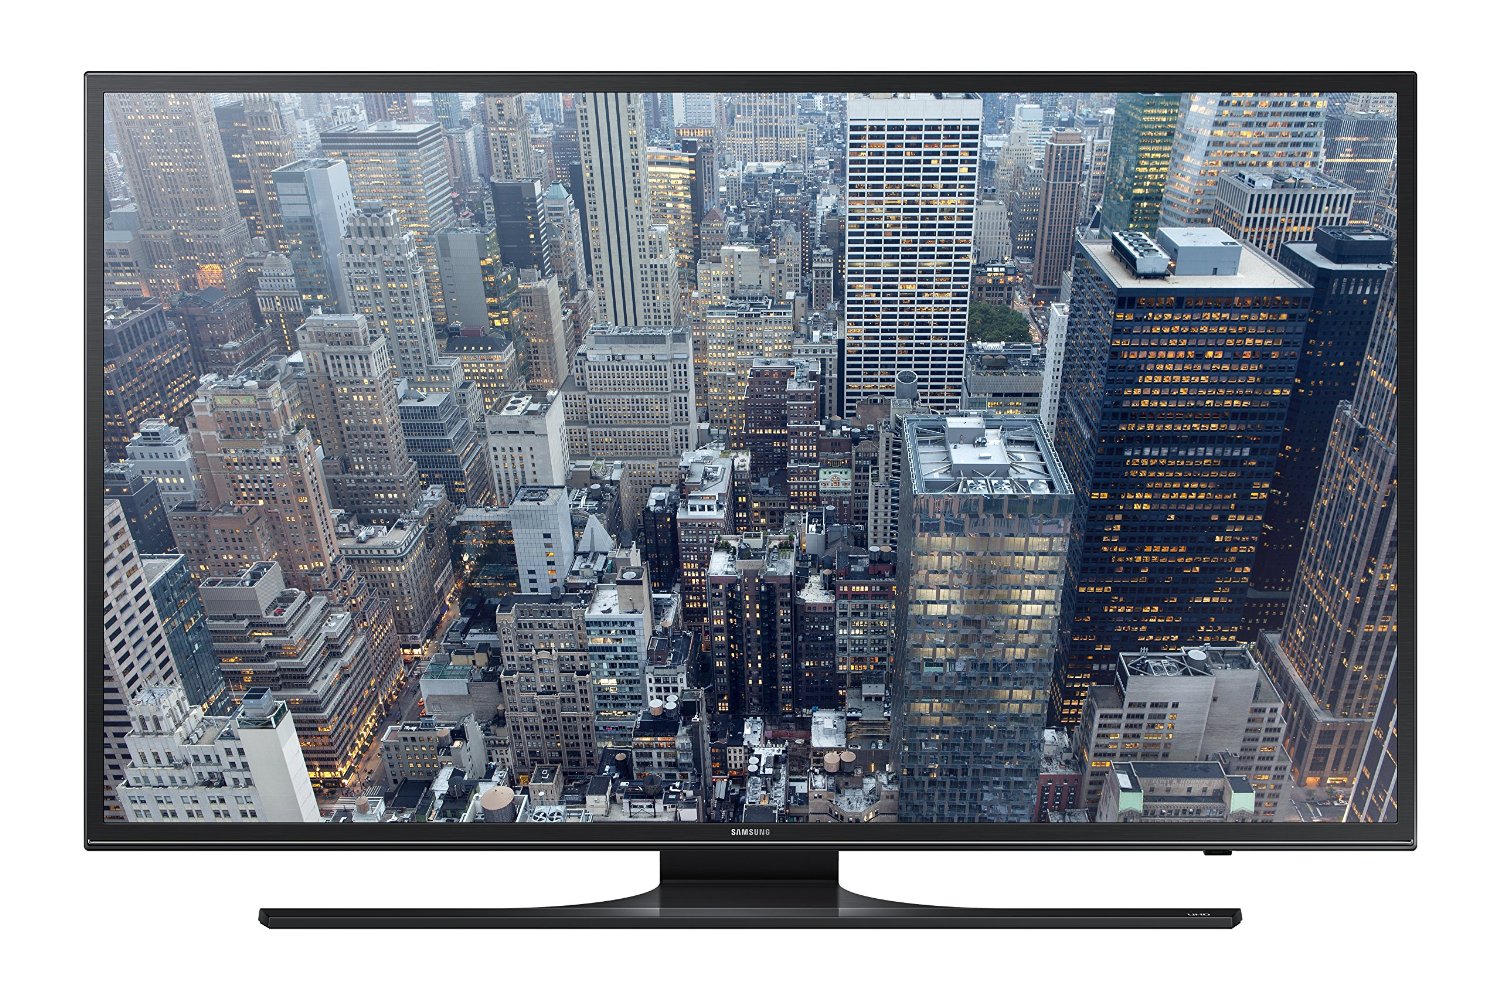 Samsung UN75JU6500 Televisor LED inteligente 4K Ultra HD de 75 pulgadas (modelo 2015)